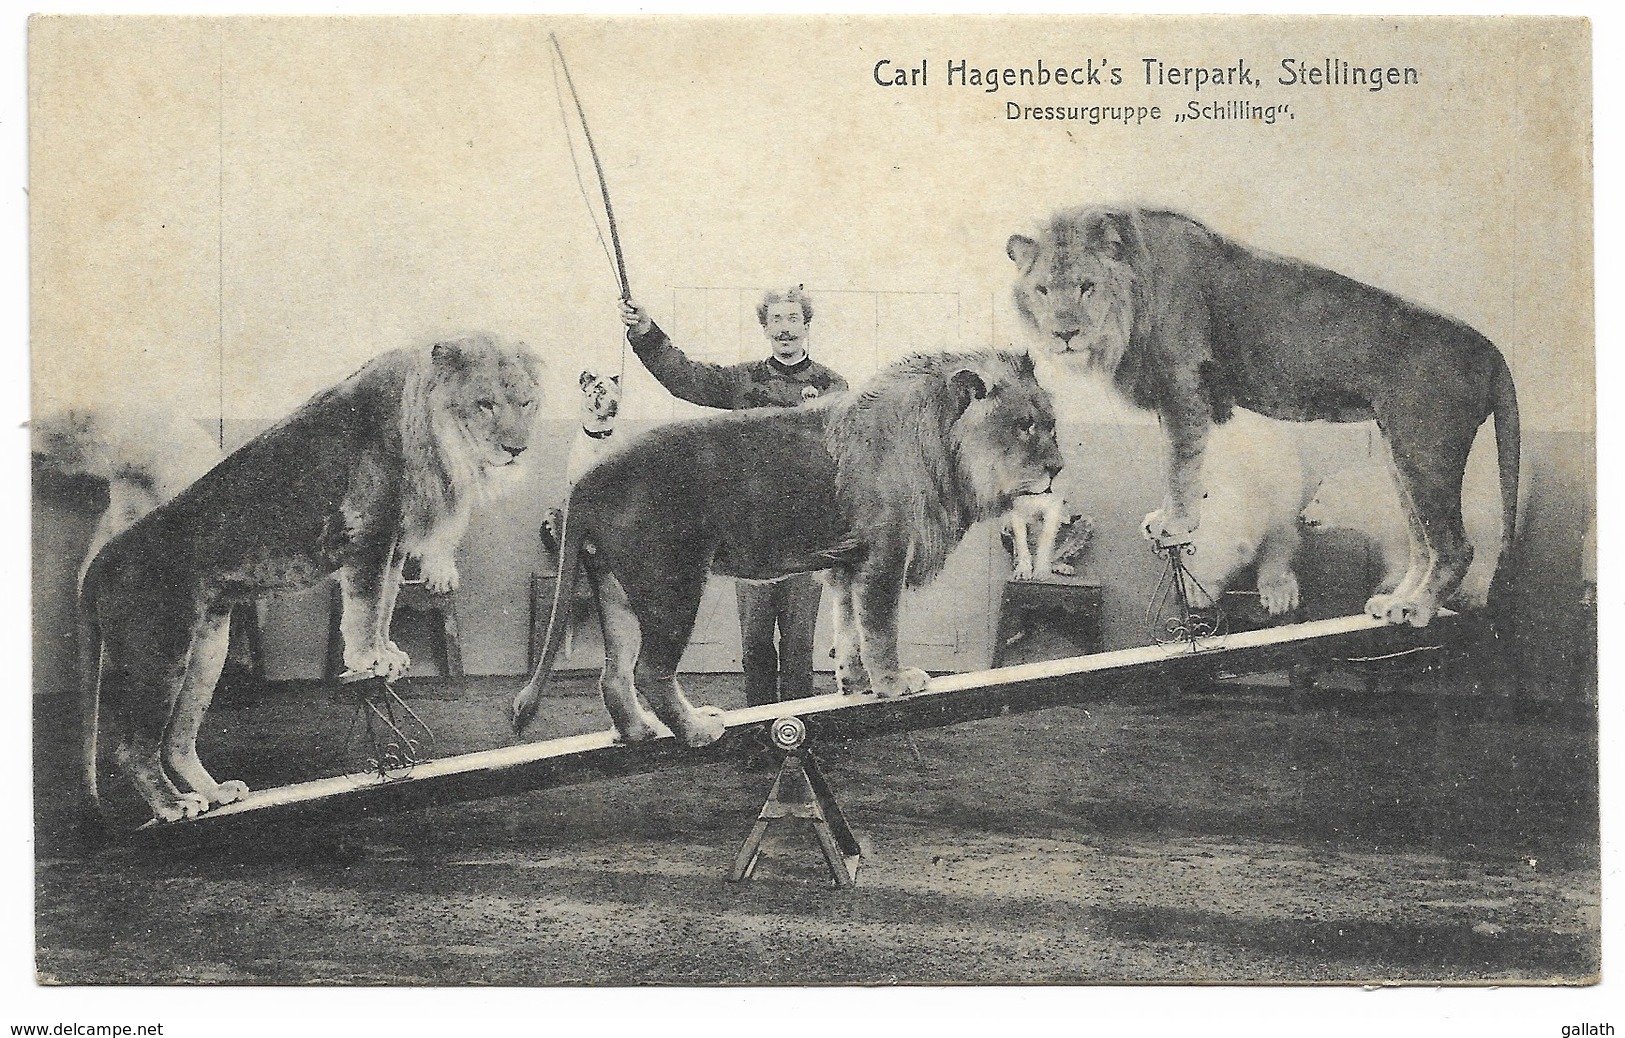 Carl Hagenbeck's Tierpark, Stellingen - Dressurgruppe "Schillind"  (Dressage De Lions) - Zirkus